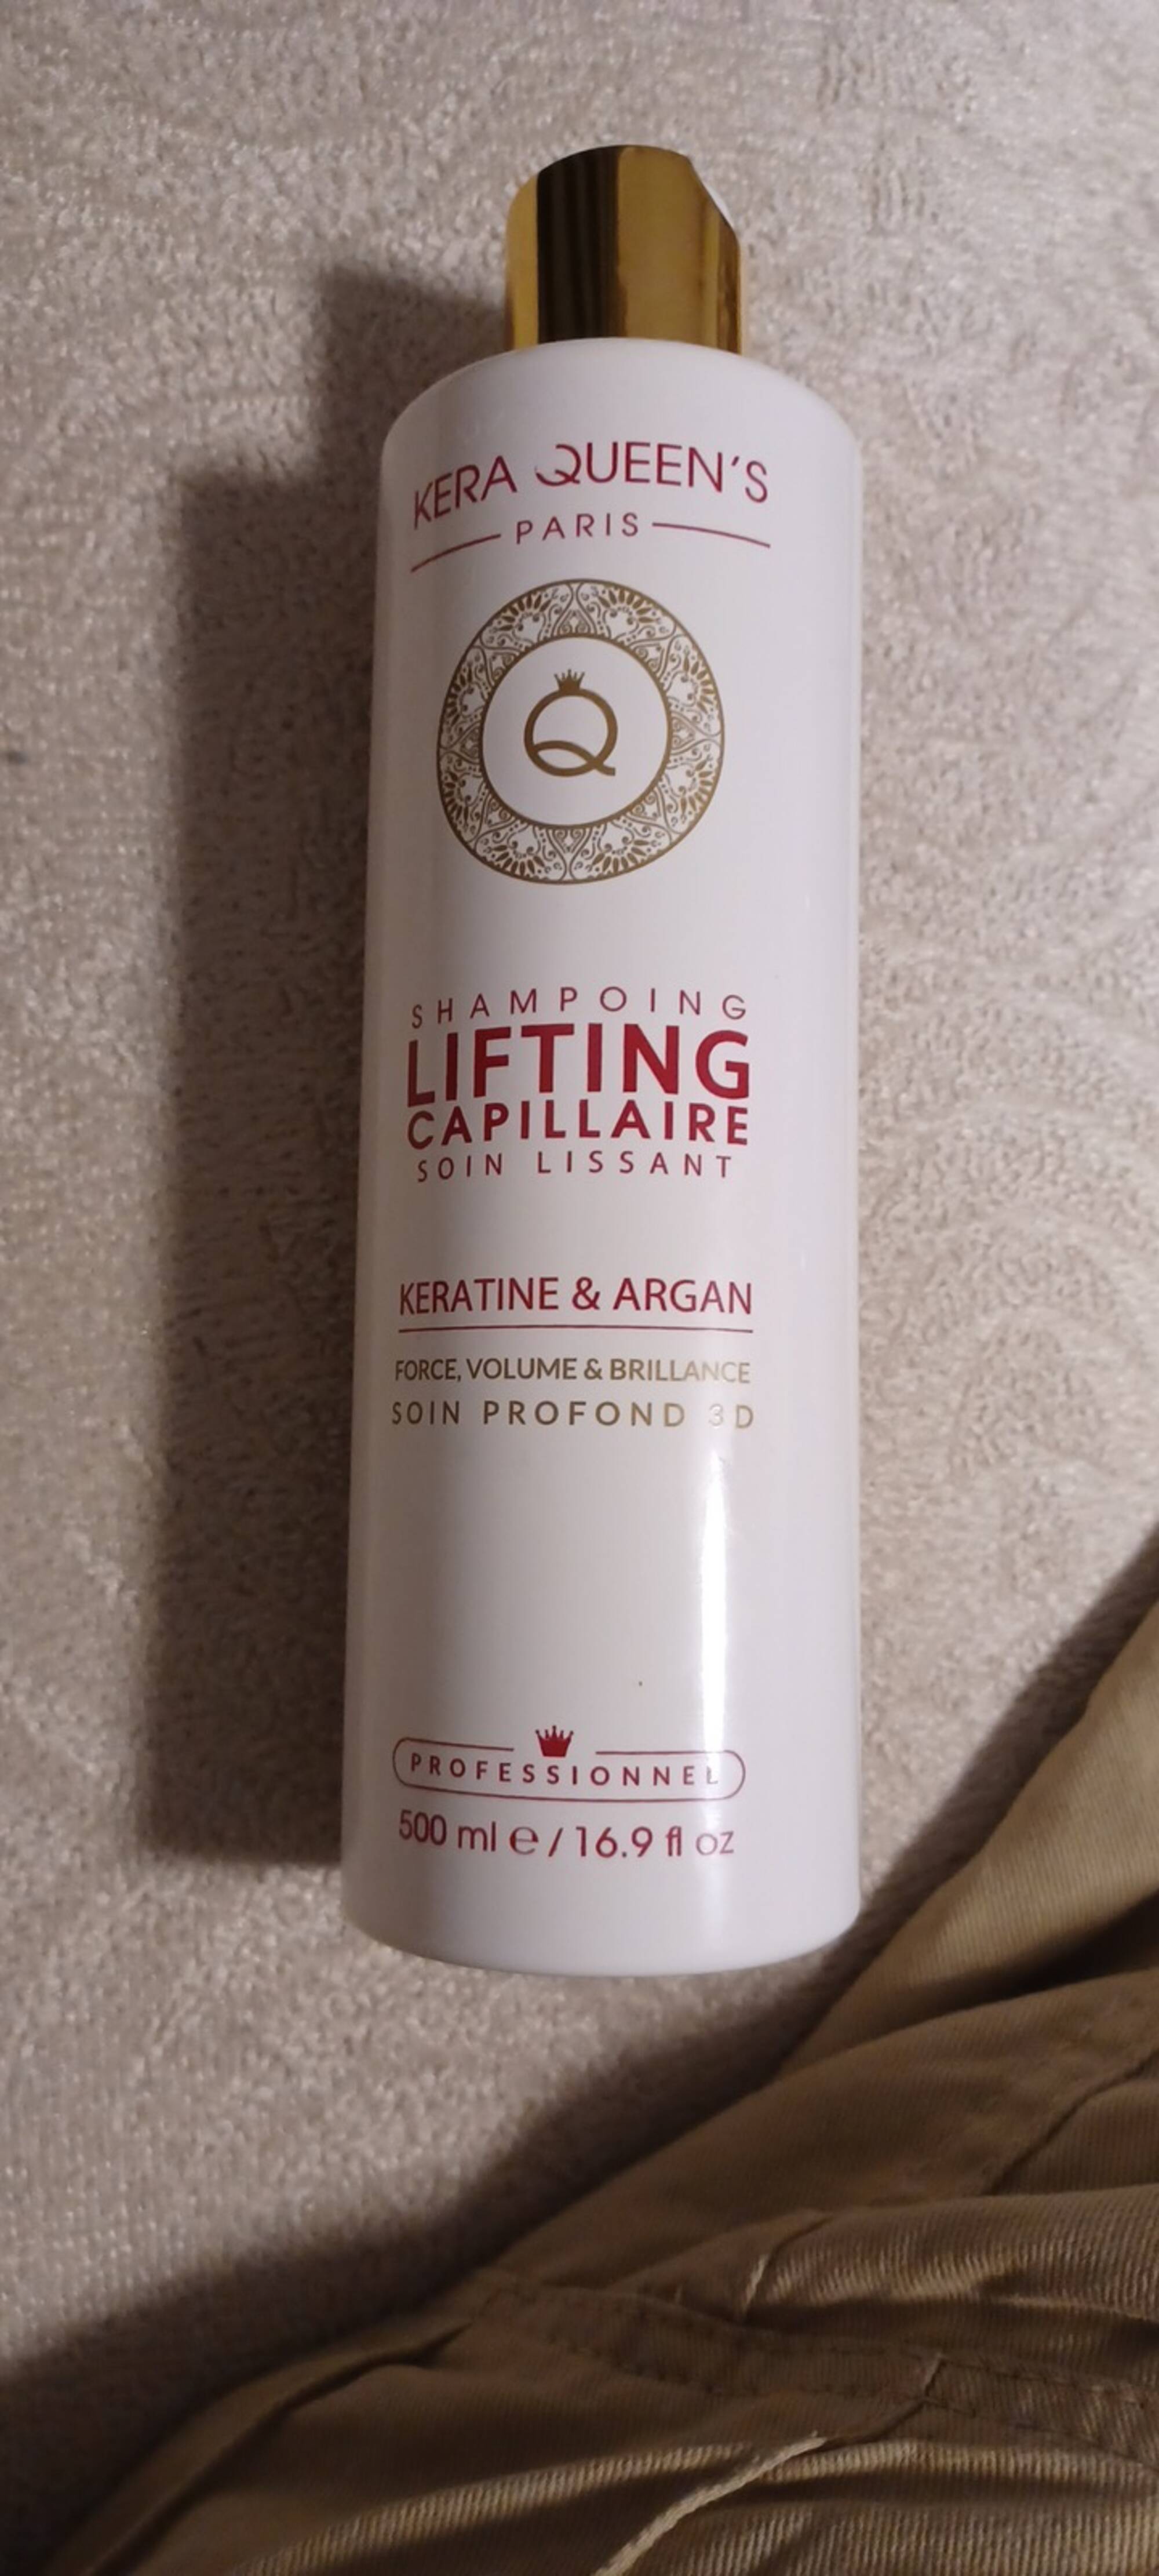 KERA QUEEN'S - Keratin & argan - Shampooing lifting capillaire